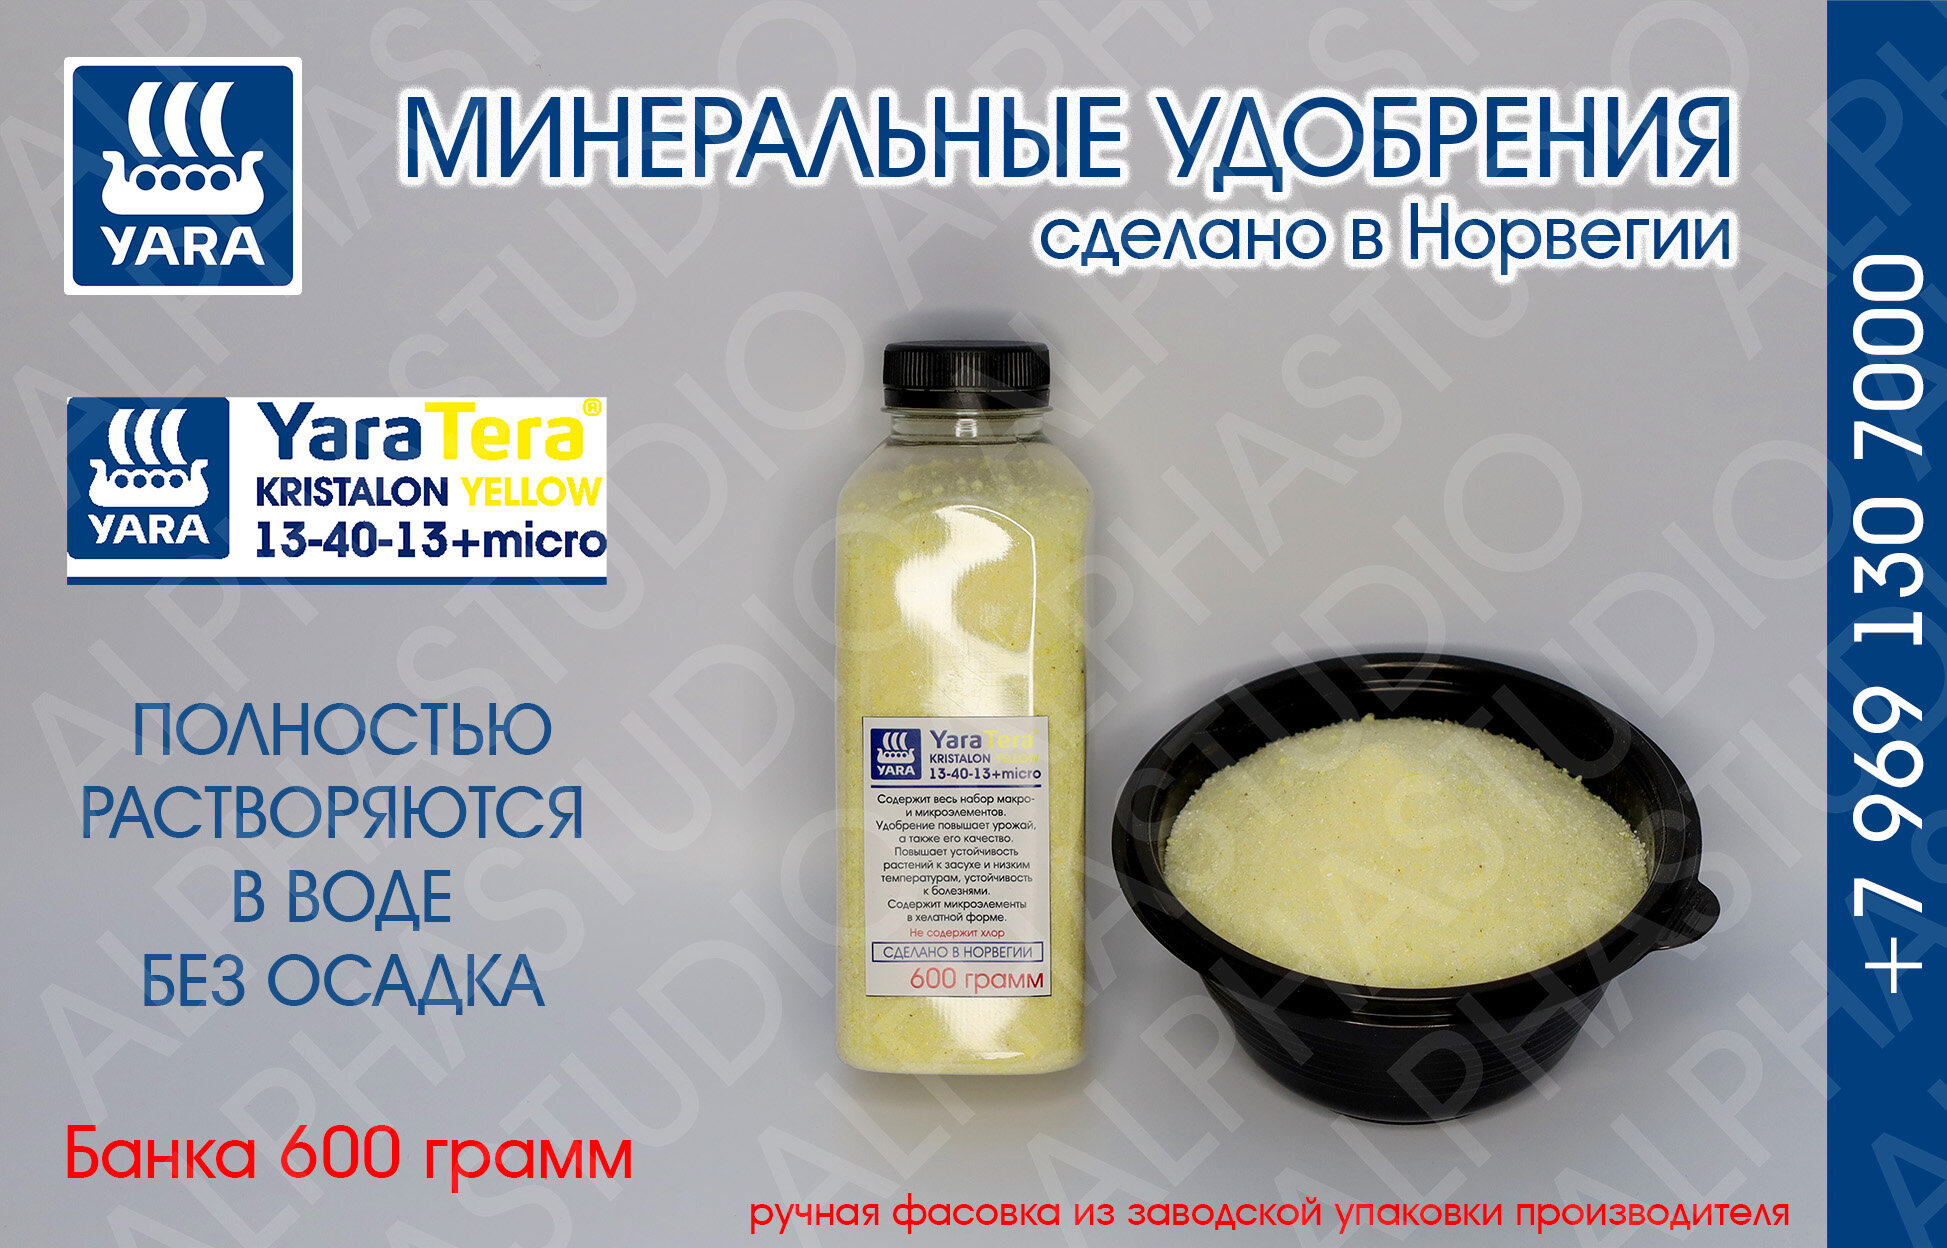 Минеральное удобрение YARA Tera Kristalon Yellow 13-40-13+micro. Банка 600 грамм